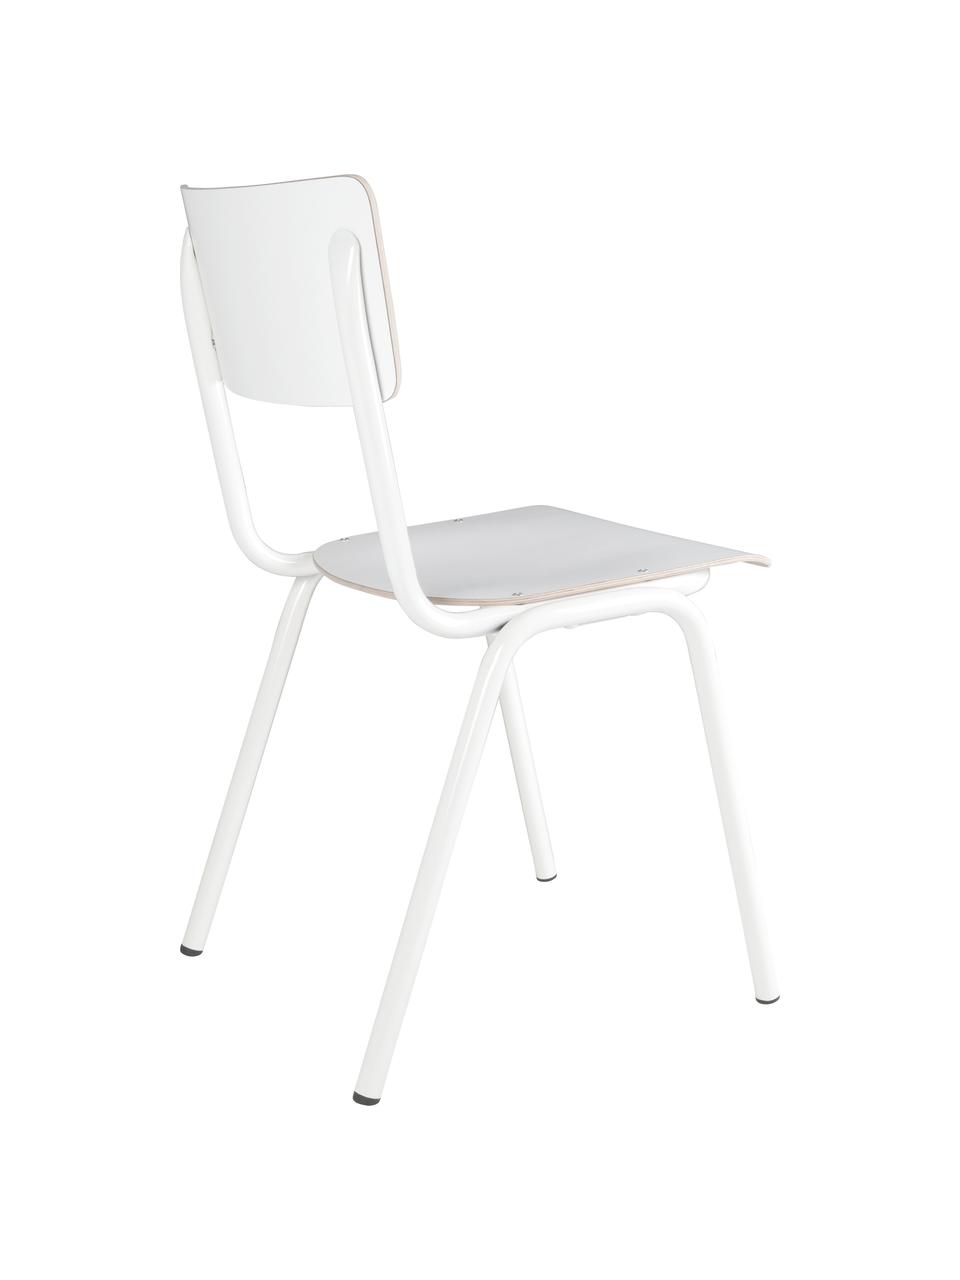 Stühle Back to School, 4 Stück, Sitzfläche: Laminat, Weiß, B 43 x T 47 cm